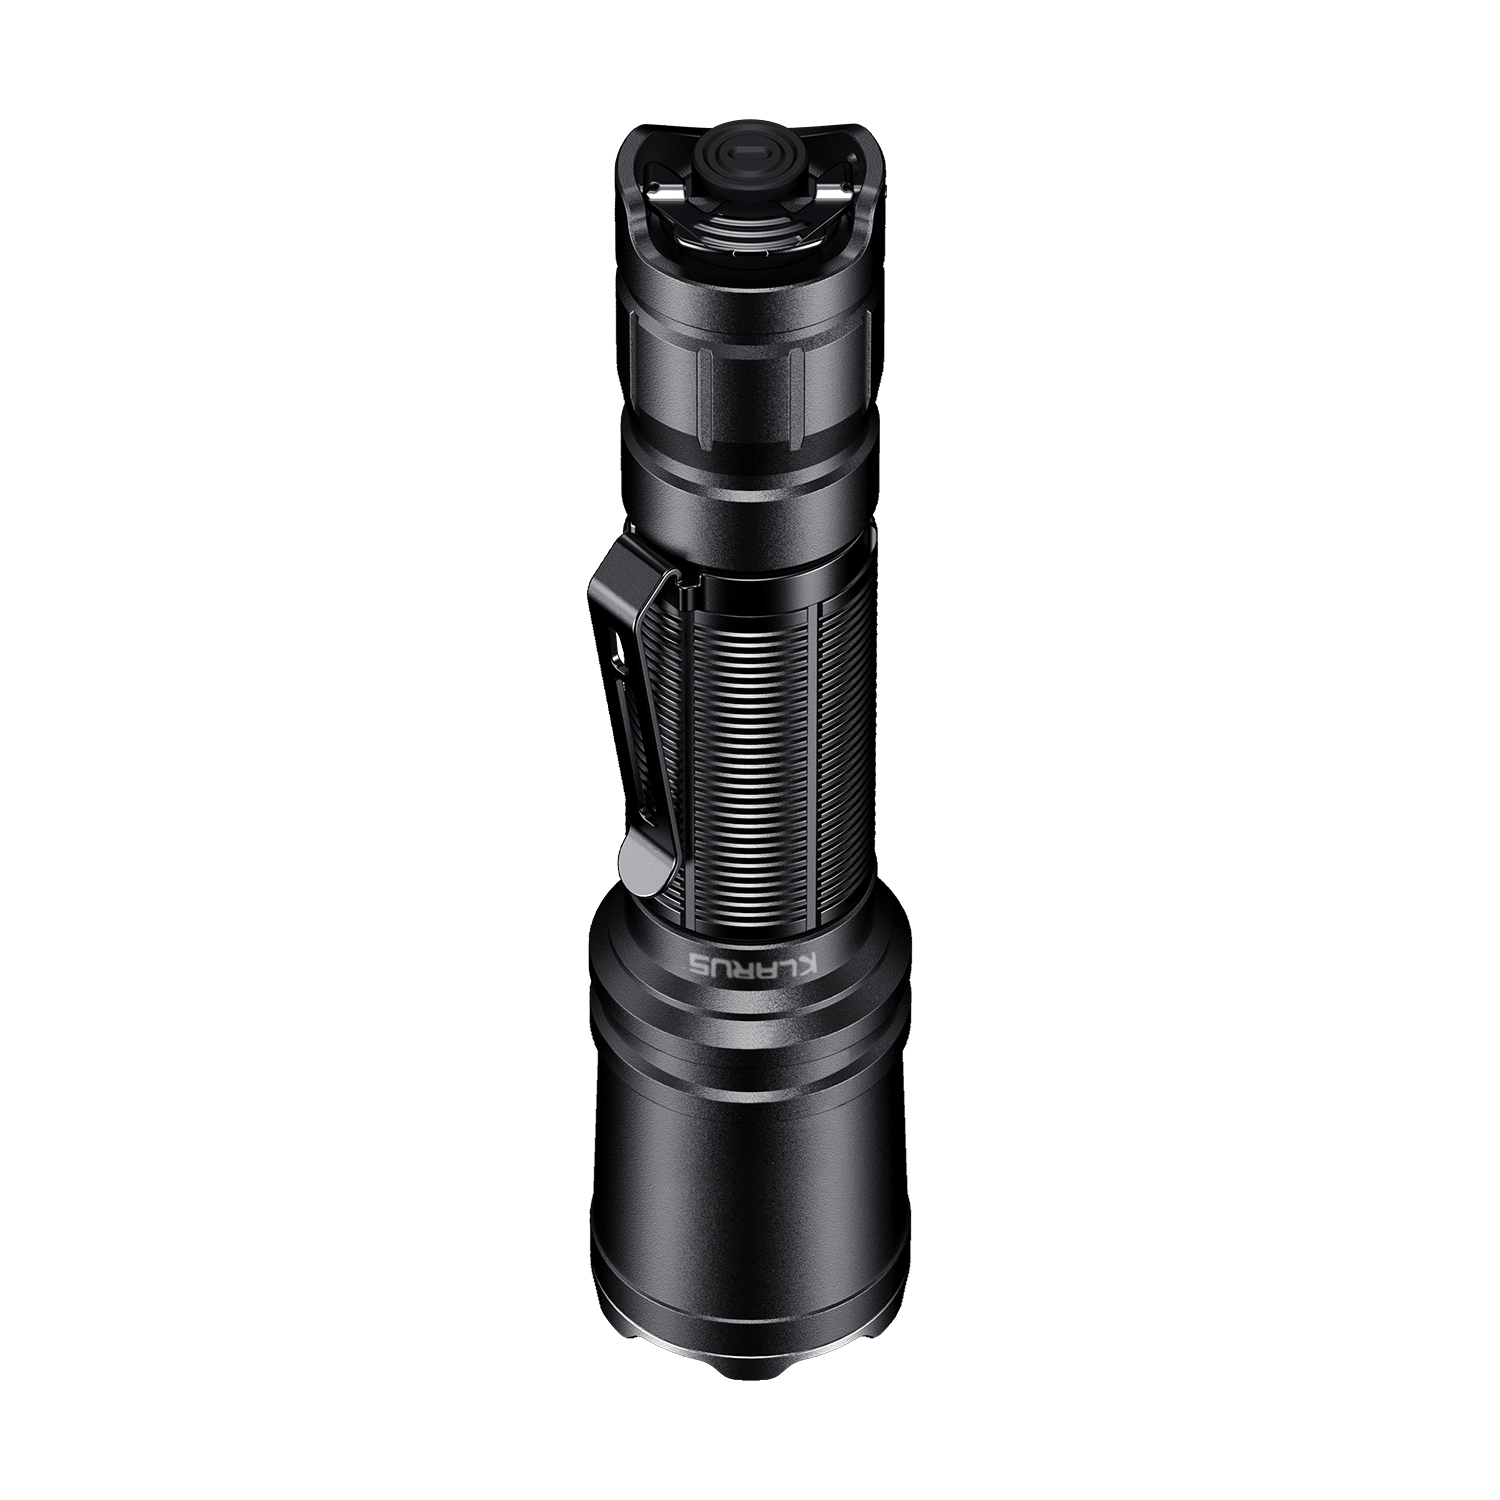 KLARUS XT11R Luminus SST-40 LED 1300 Lumens 18650 Type-C Rechargeable Tactical flashlight